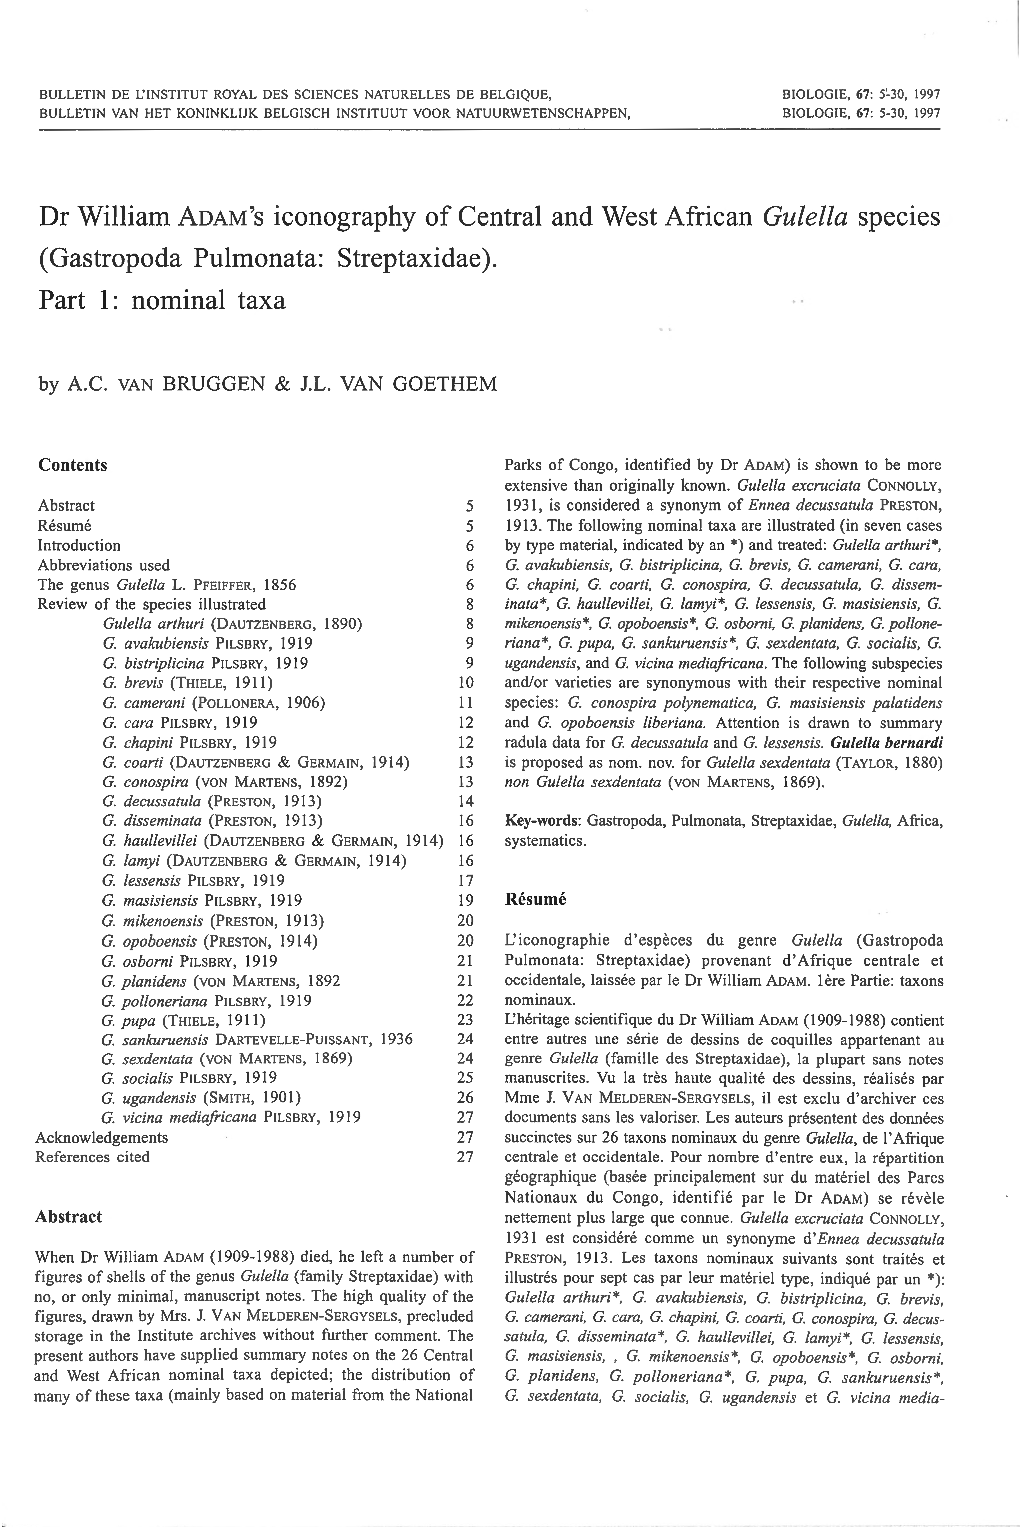 (Gastropoda Pulmonata: Streptaxidae ). Bulletin De L'jnstitut Royal Des Sciences Natureli Es De Belgique, Biologie, 64: 71-97